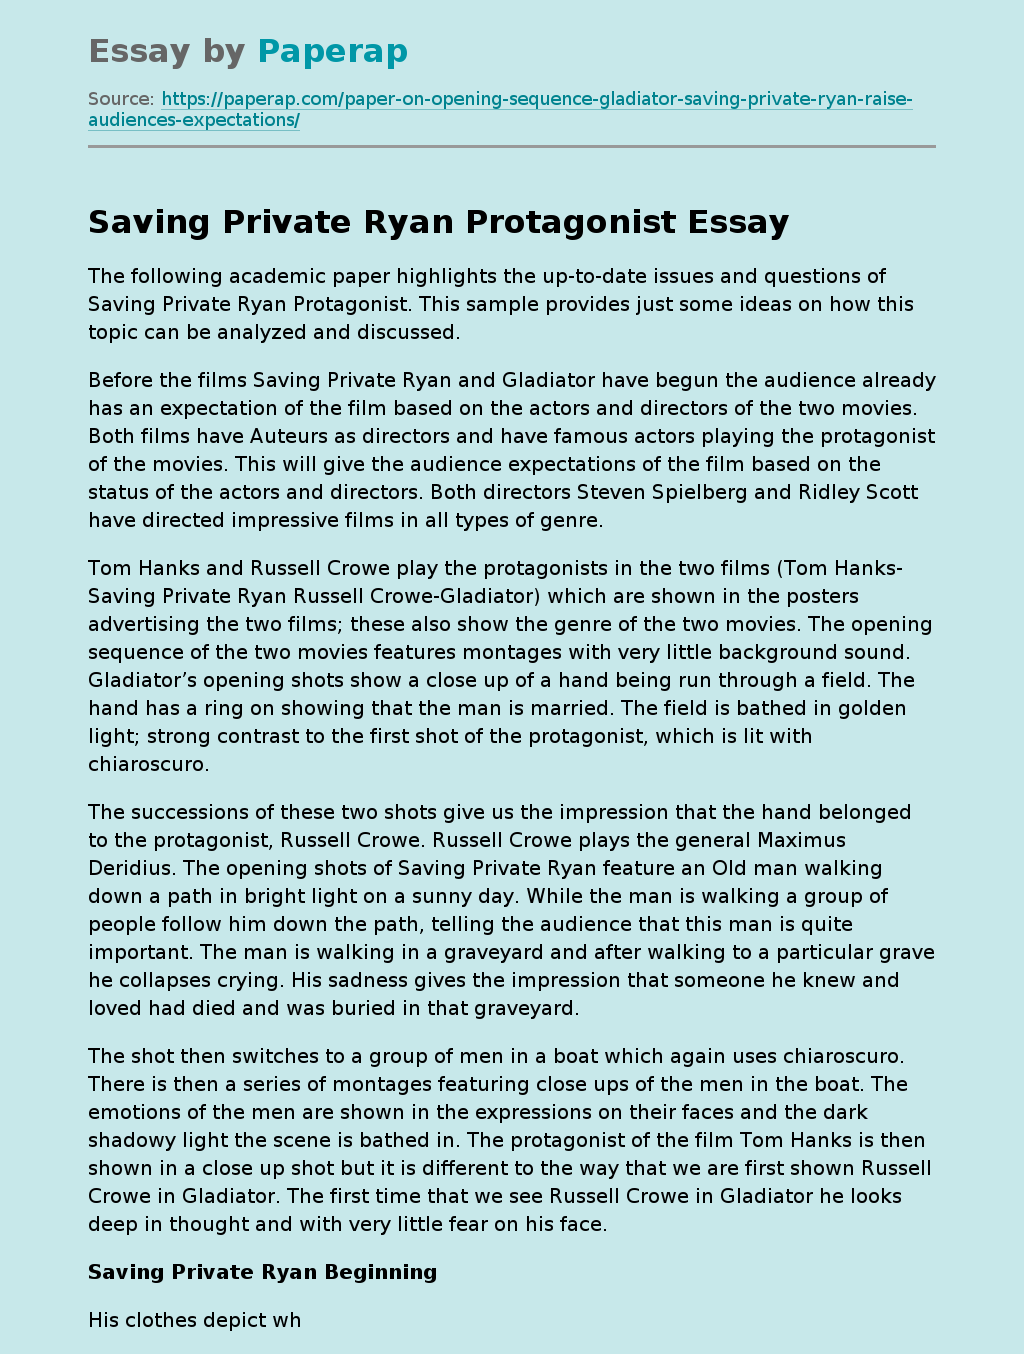 Saving Private Ryan Protagonist